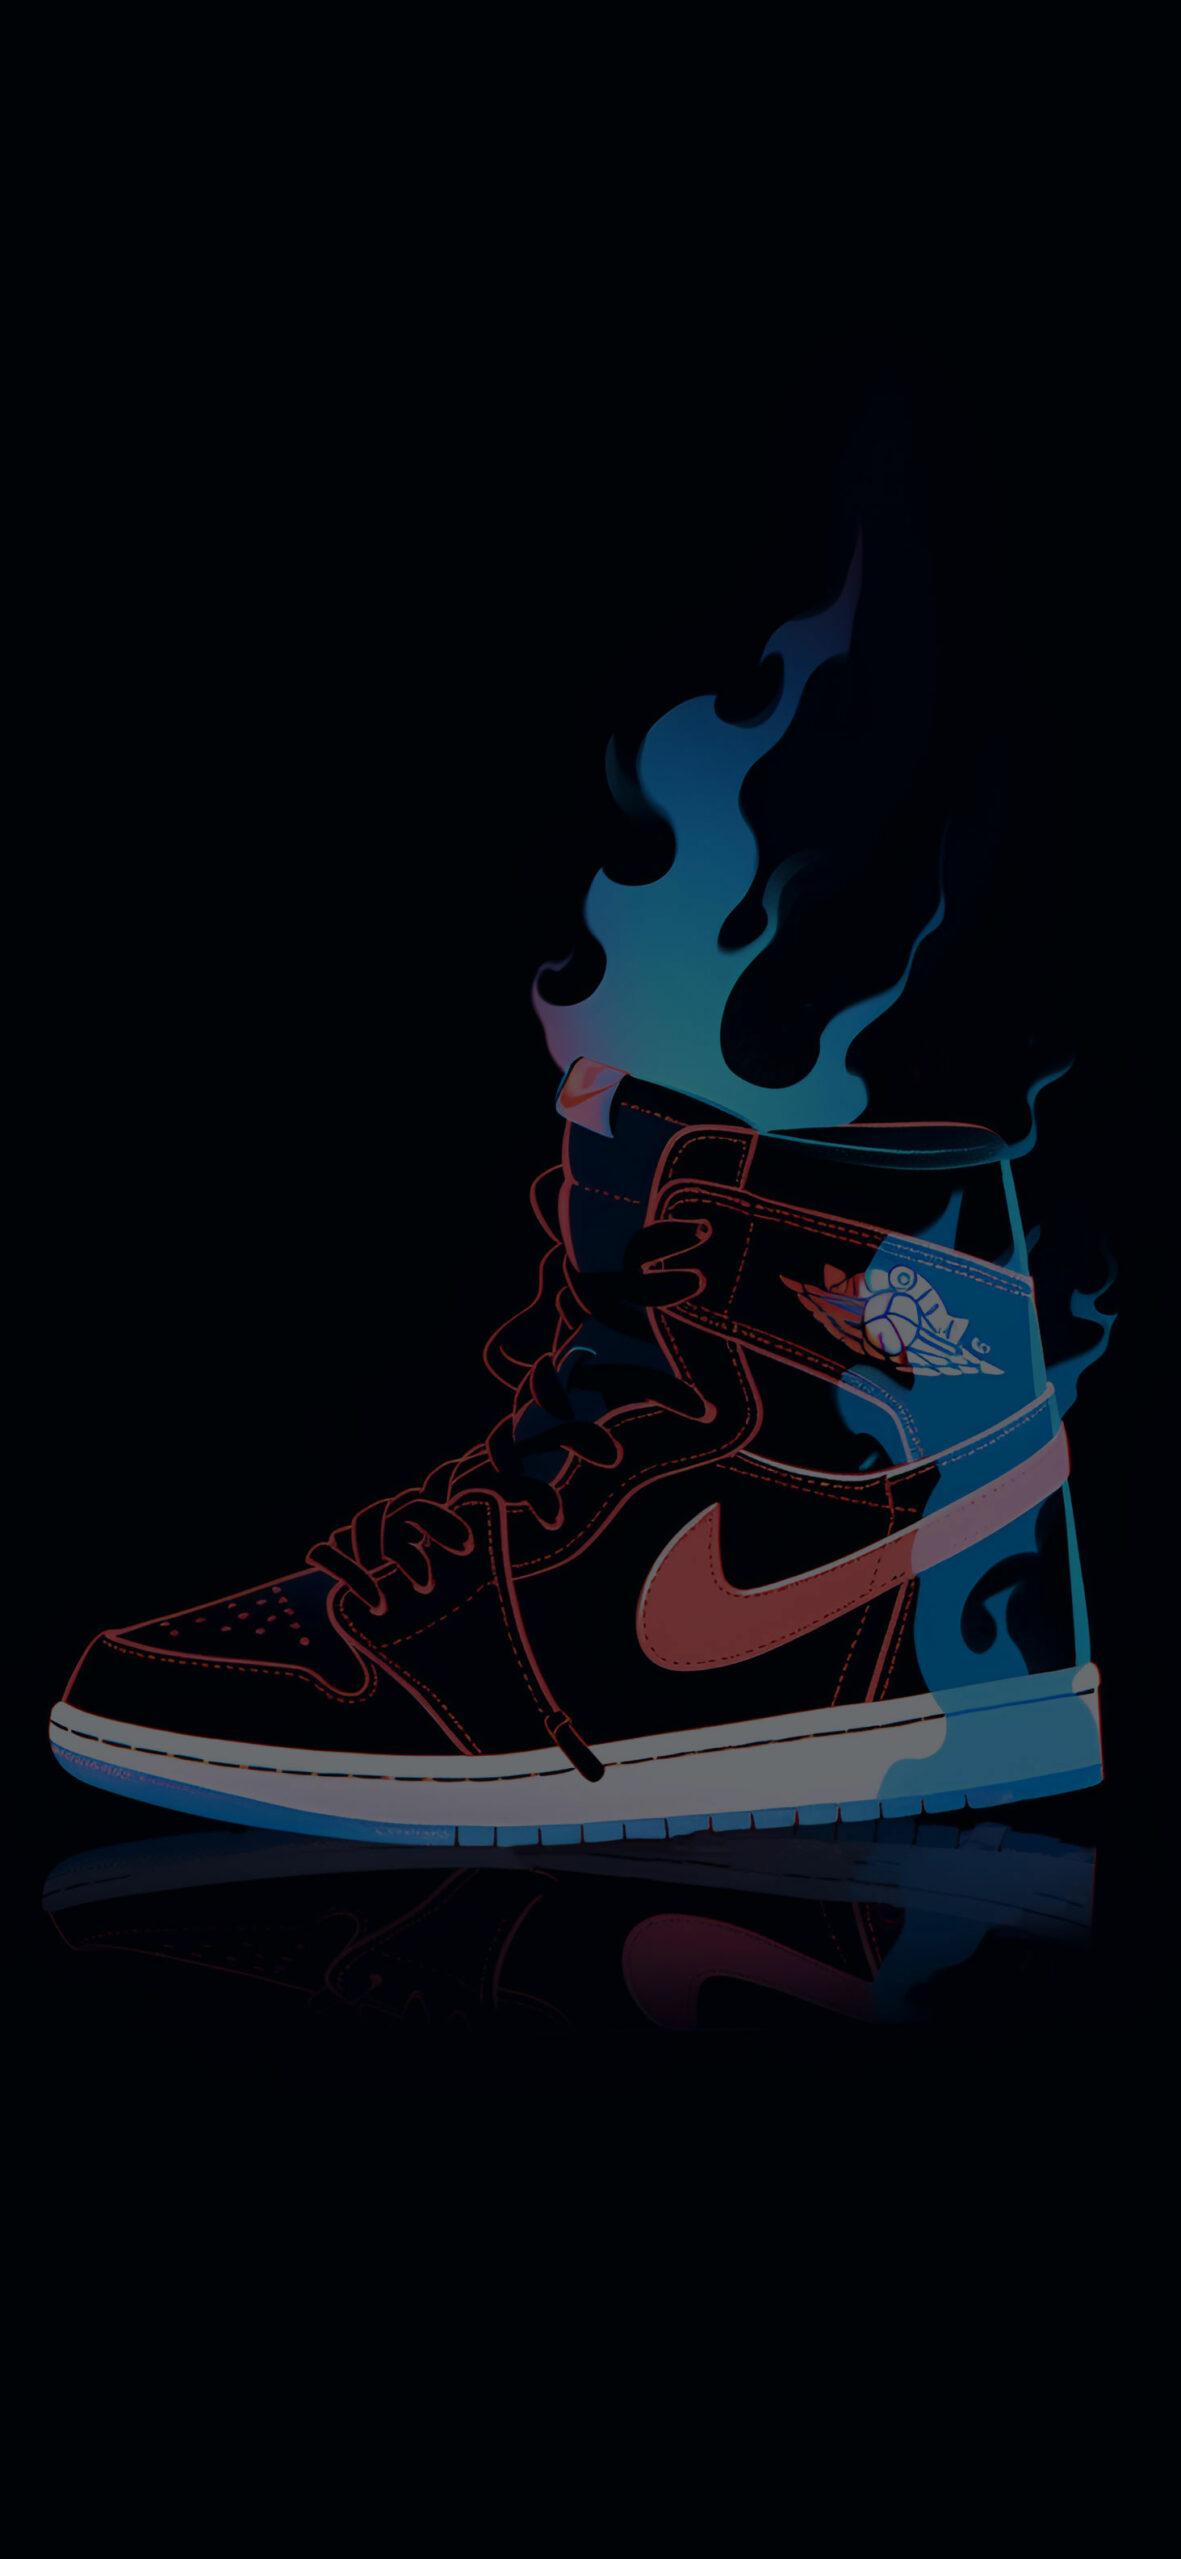 Fiery Nike Air Jordan Cool Wallpaper Sneakerhead